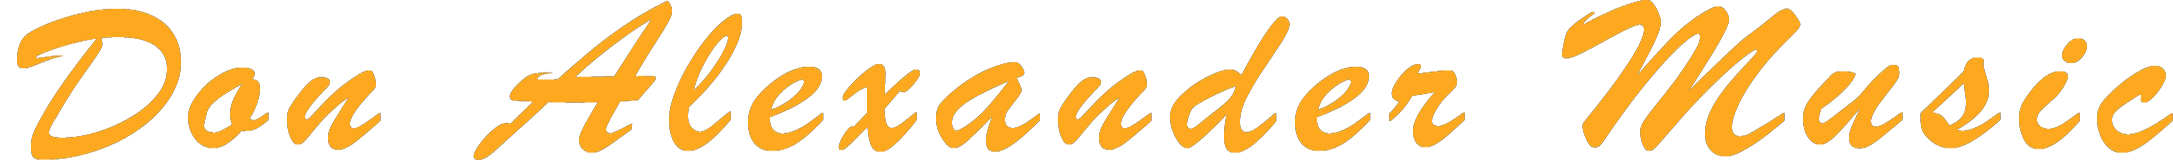 Don Alexander Music (logo)